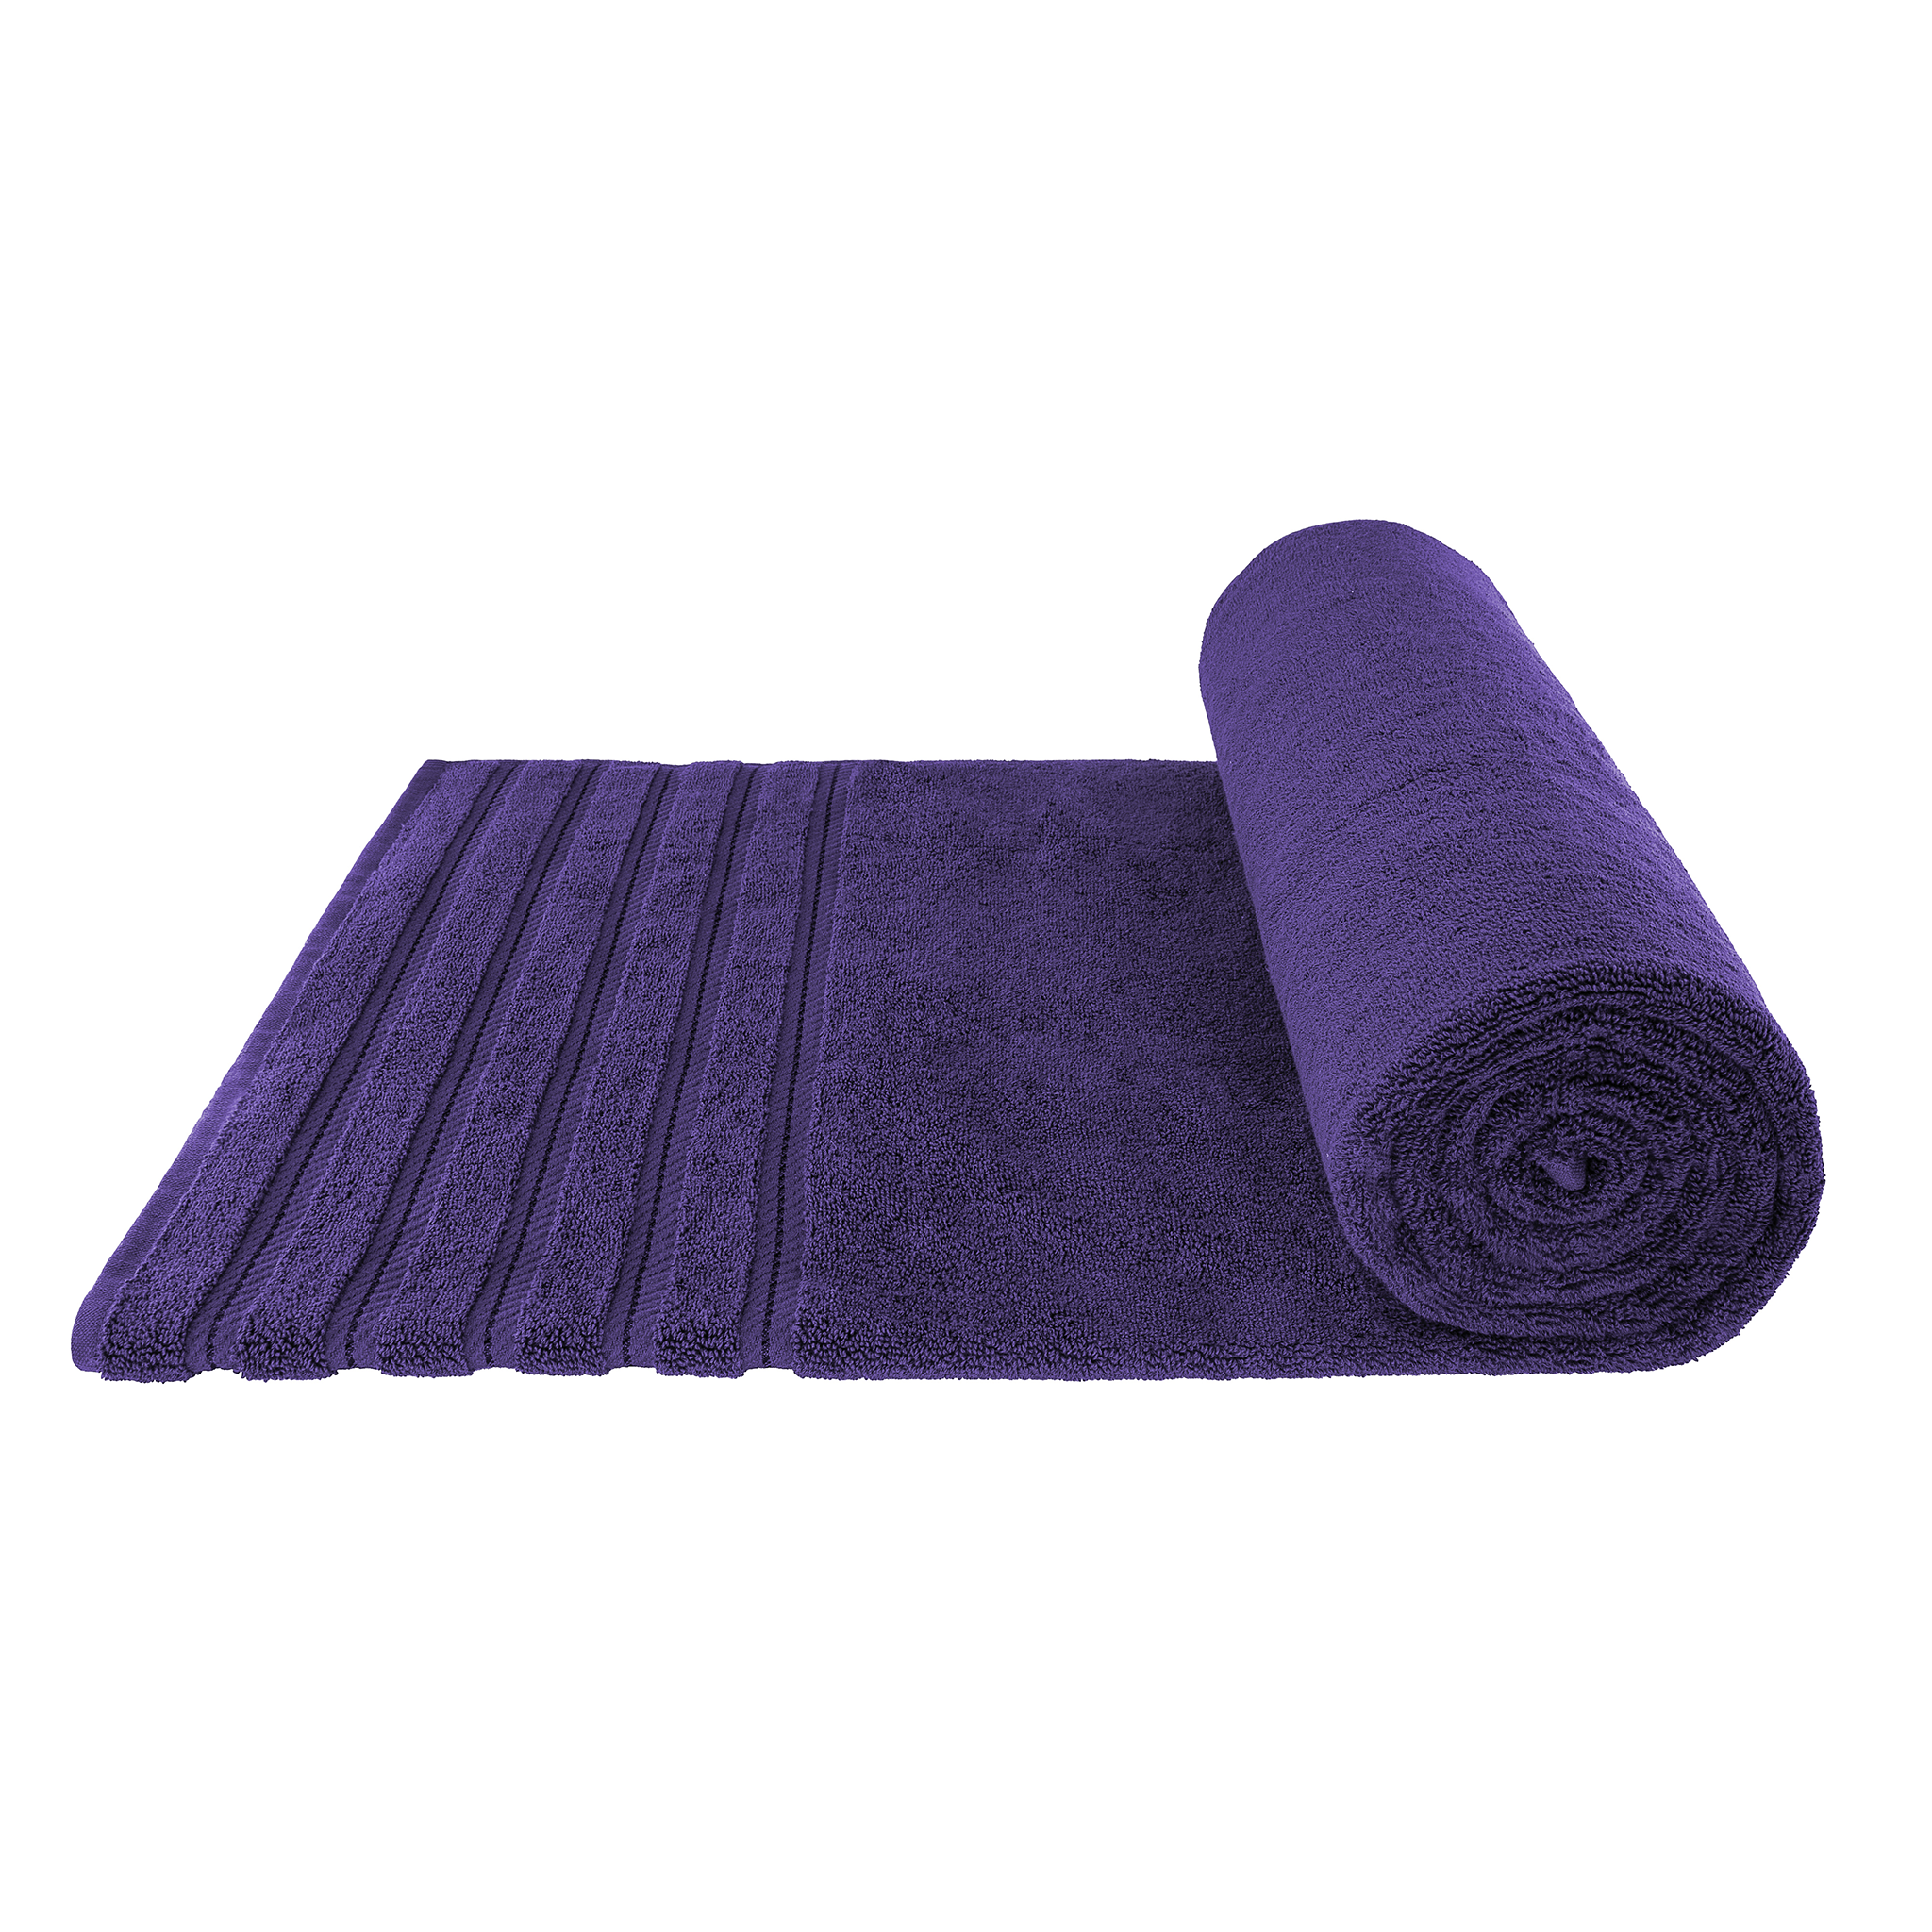 American Soft Linen - 35x70 Jumbo Bath Sheet Turkish Bath Towel - 16 Piece Case Pack - Purple - 6